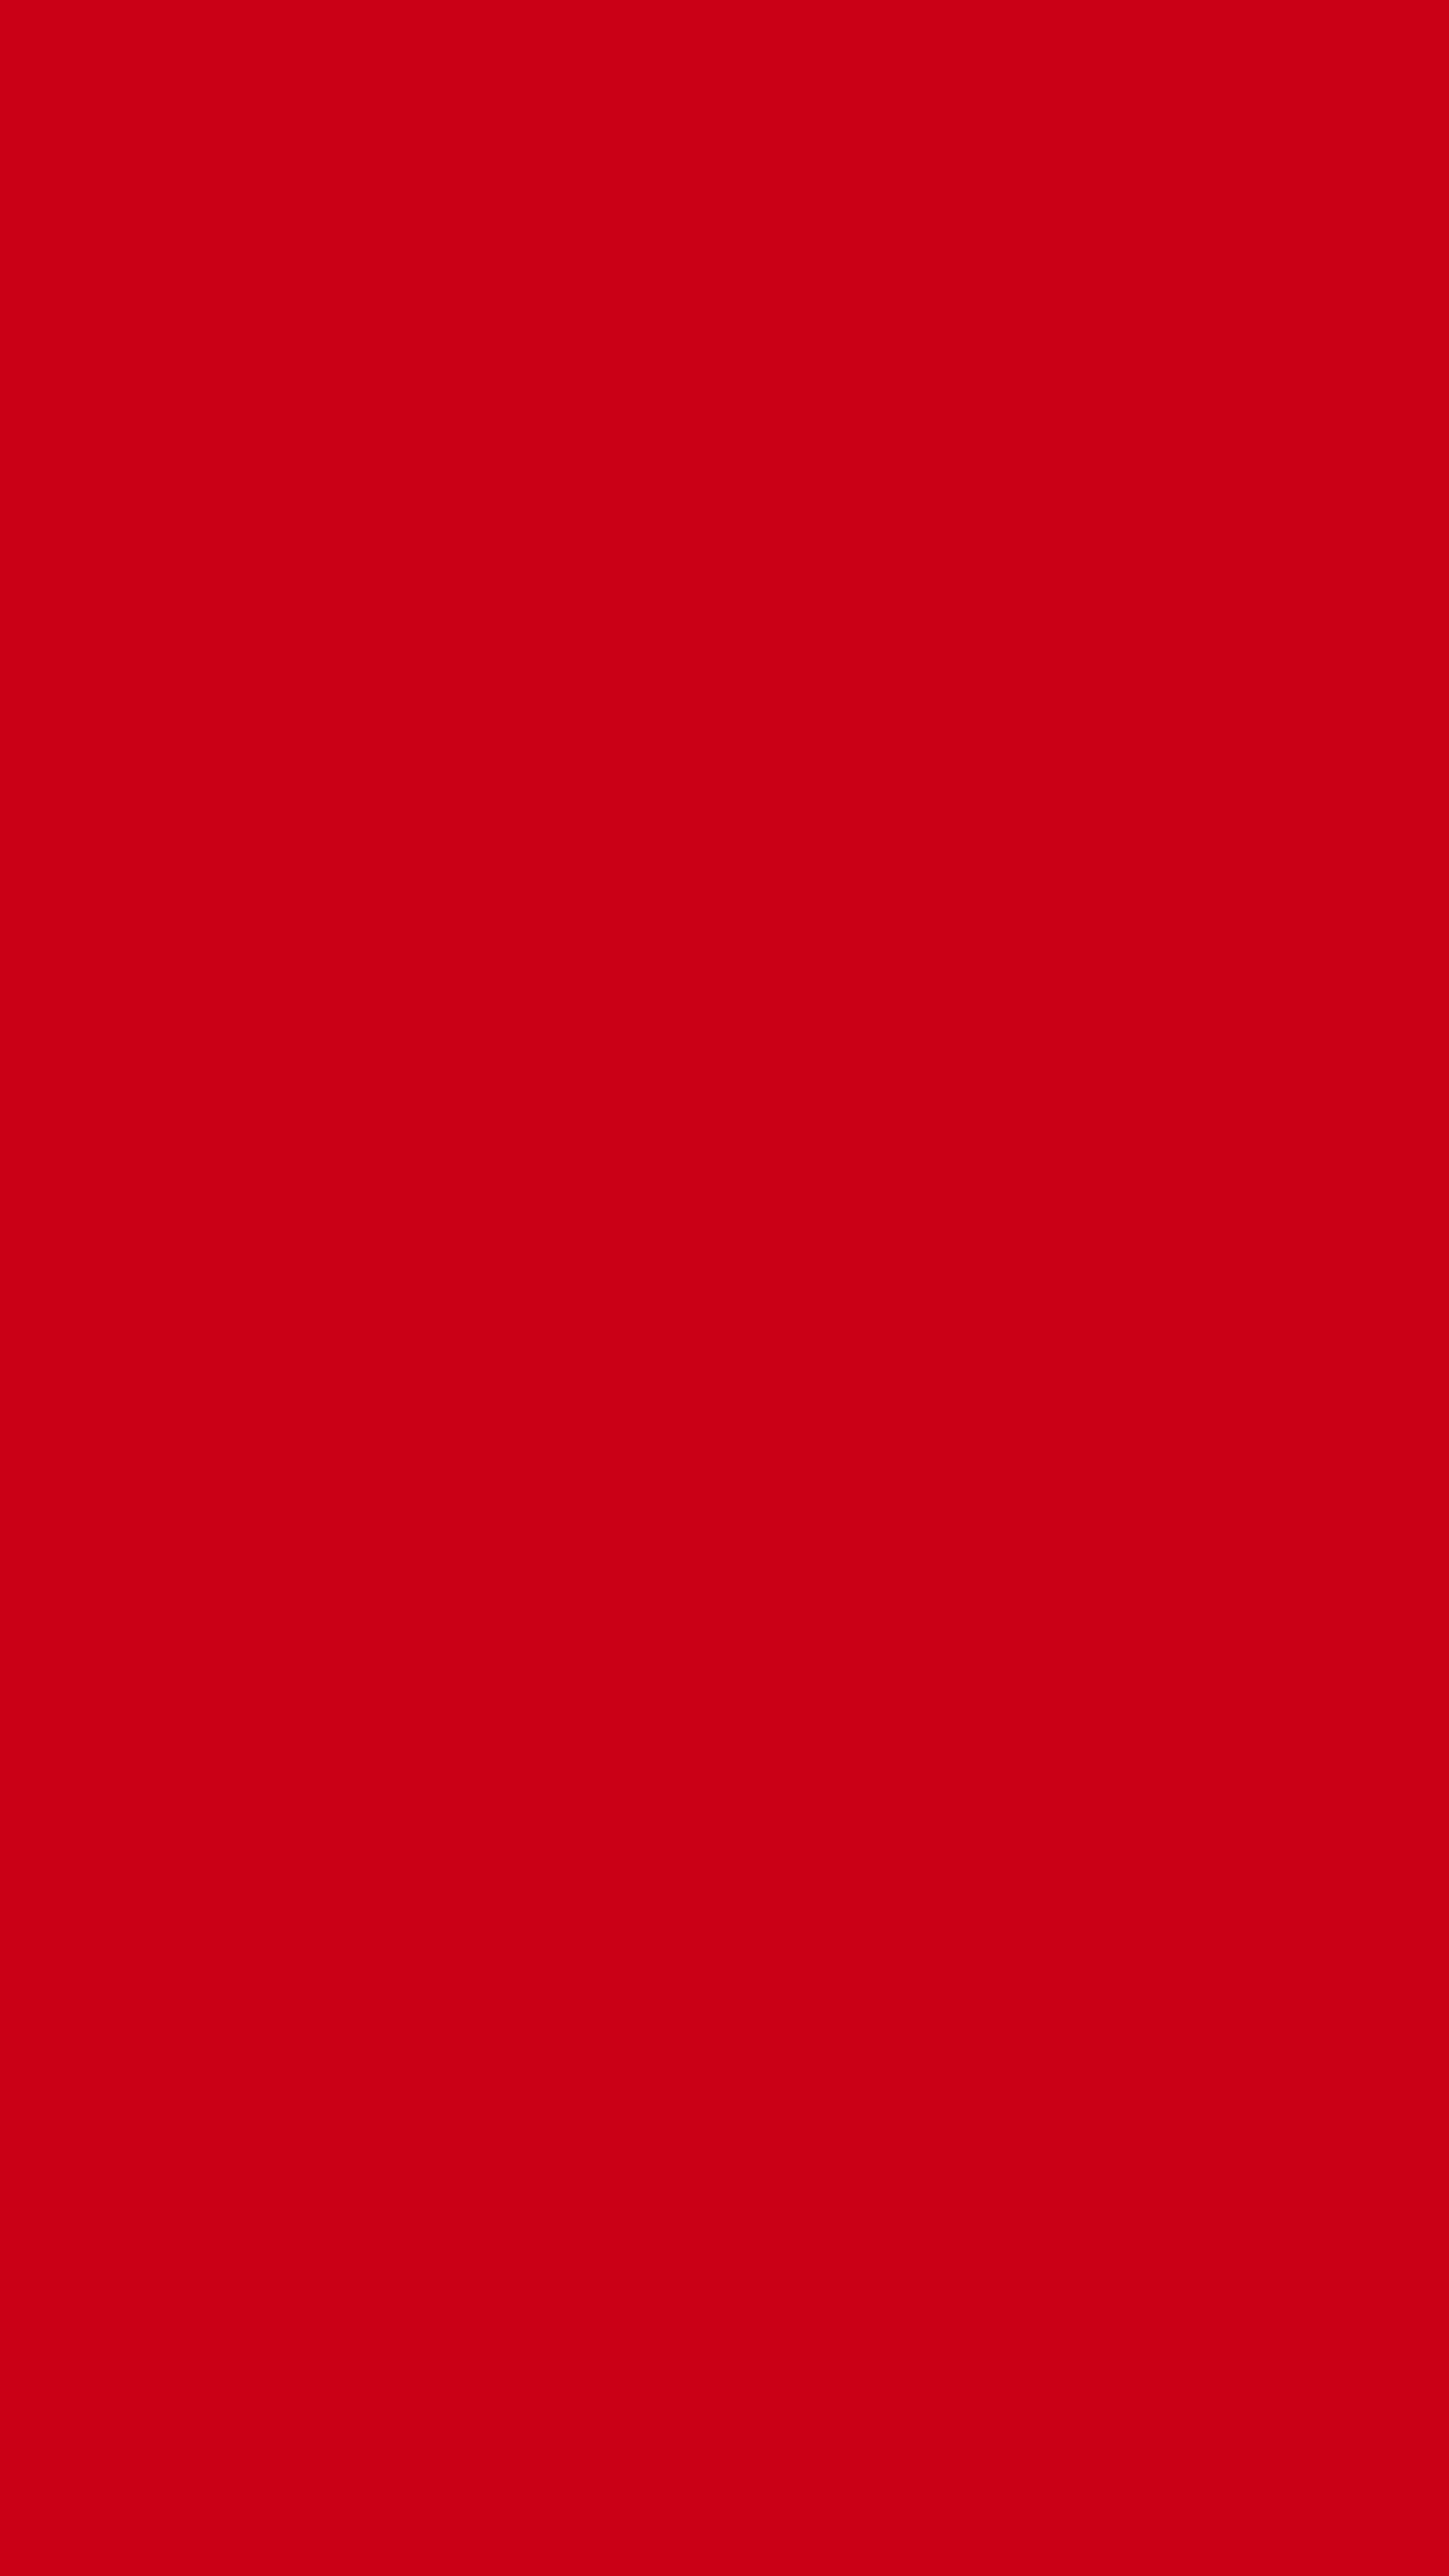 Harvard Crimson Solid Color Background Wallpaper for Mobile Phone